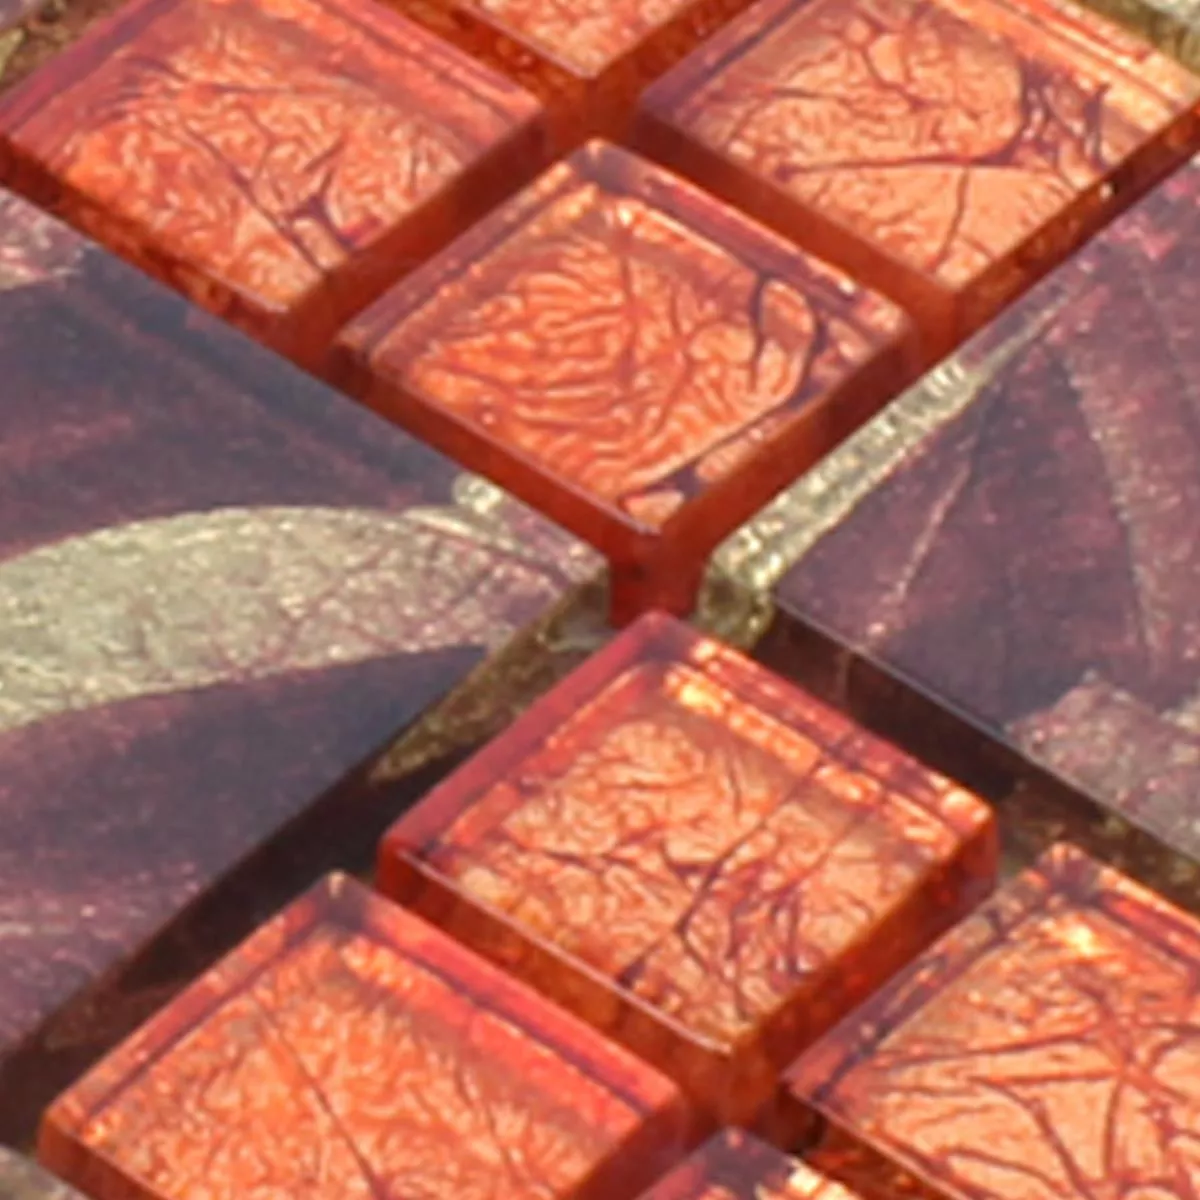 Próbka Mozaika Szklana Płytki Firebird Pomarańczowy